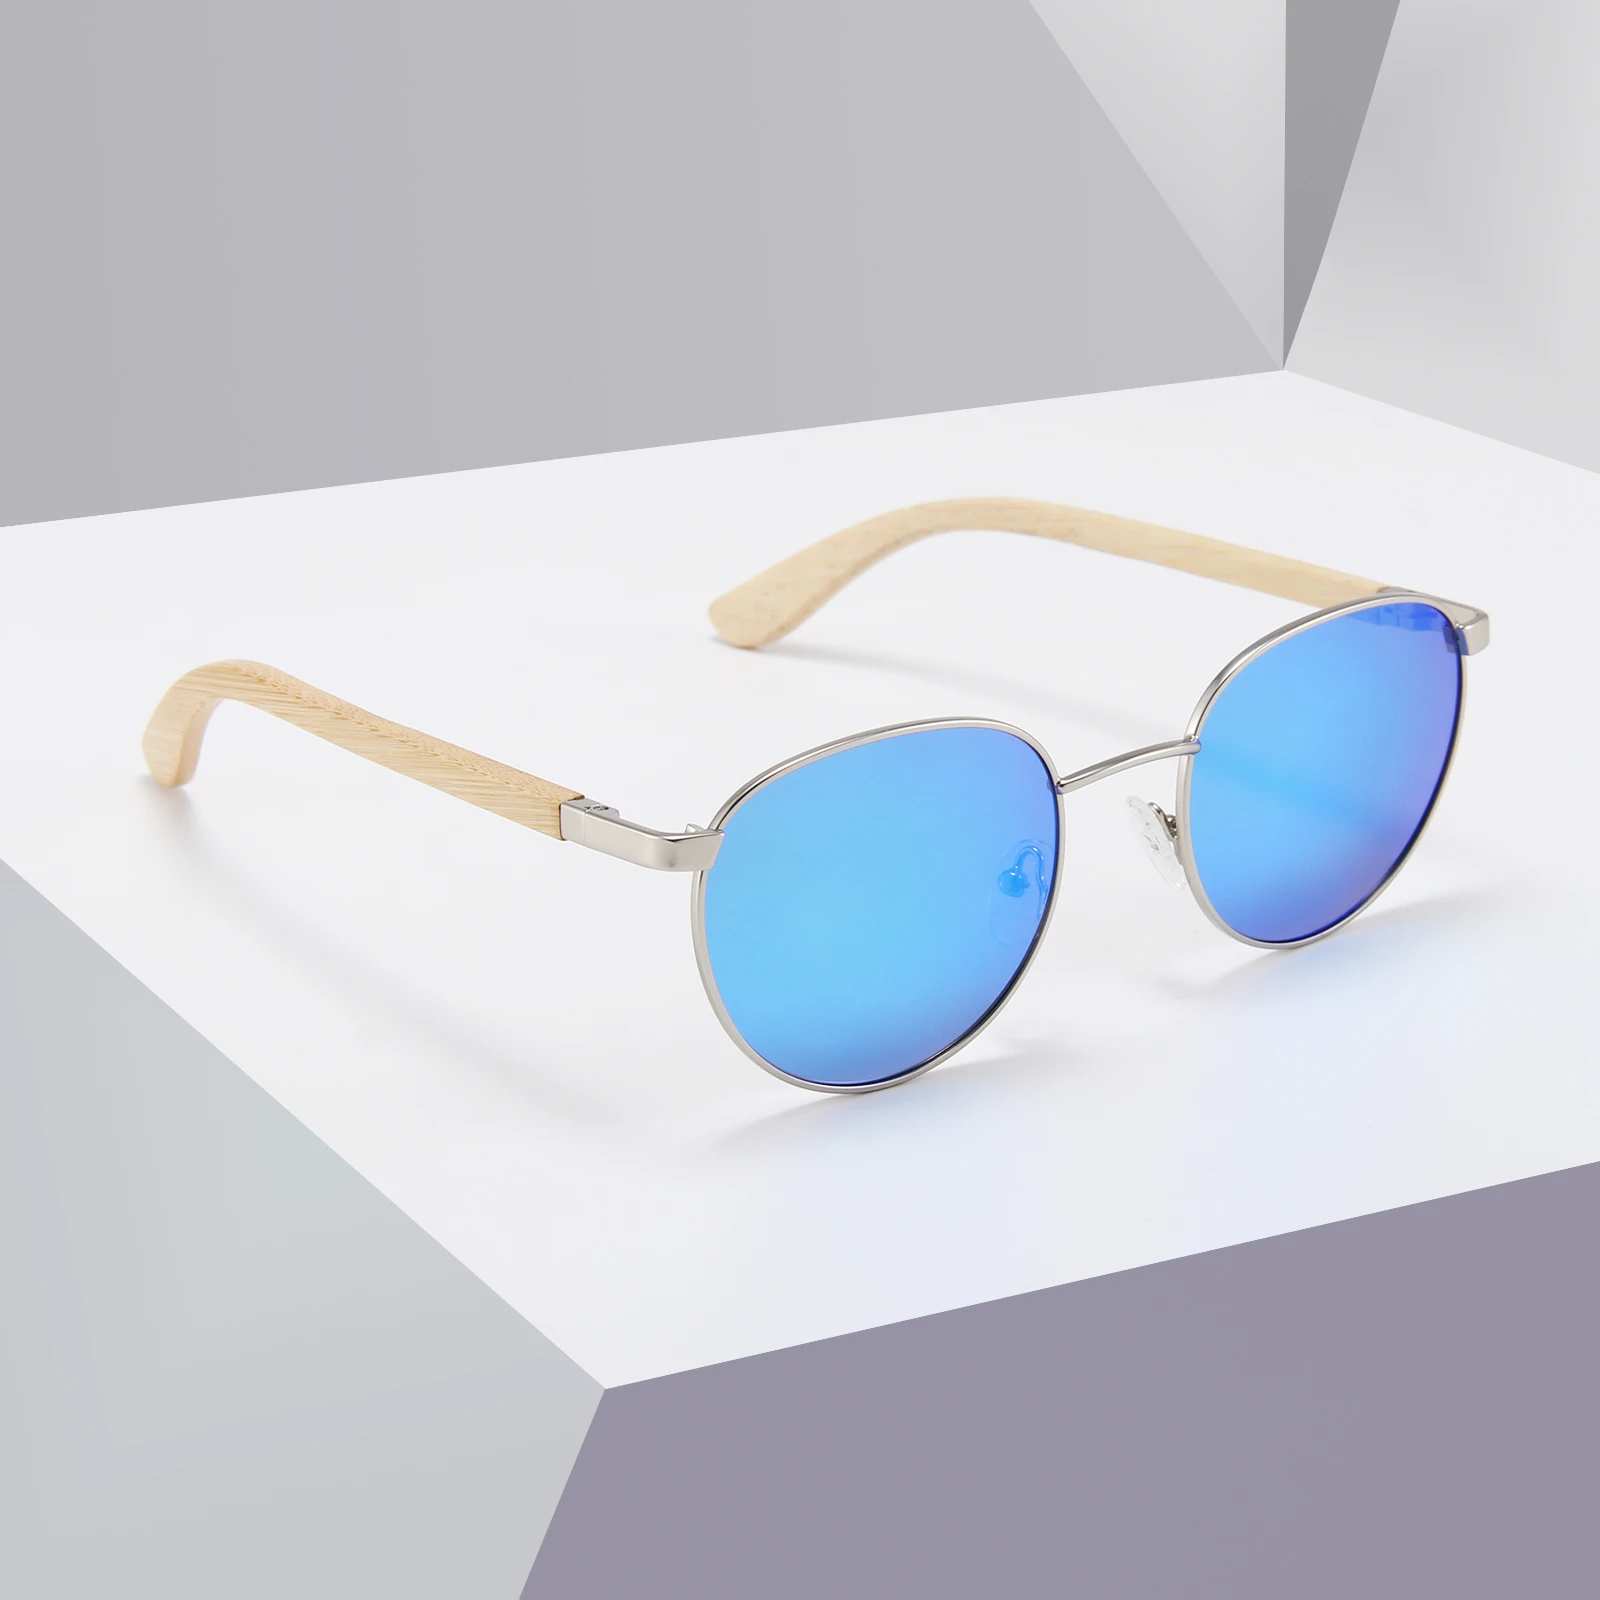 

CONCHEN Eco-friendly Bamboo Wood Sun glasses Polarized Metal Frame Small Women TAC Sunglasses